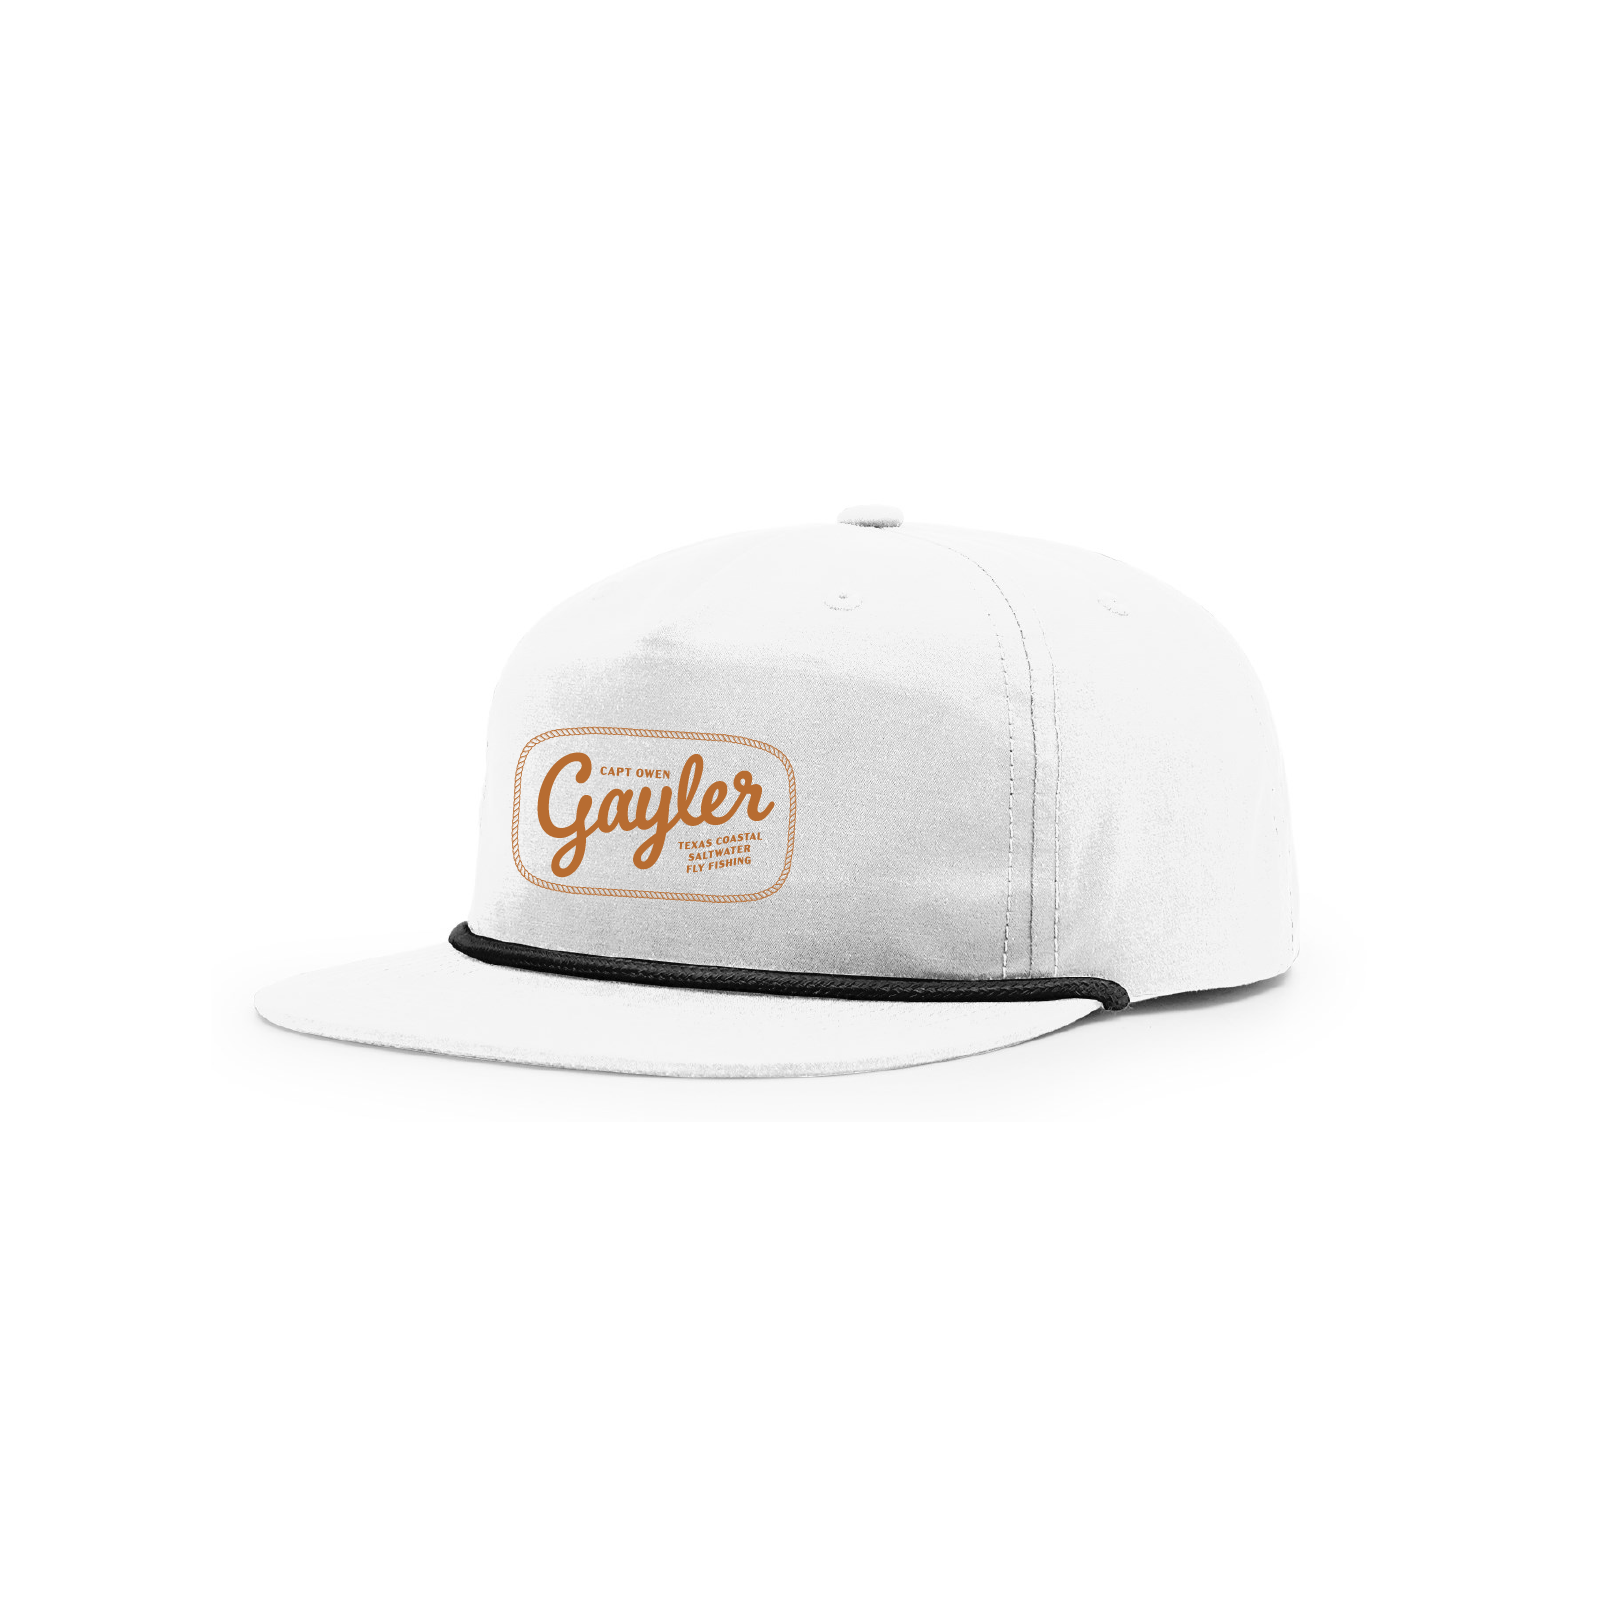 Gayler Brand Goods — Owen Gayler Fly Fishing, Port O'Connor, Texas